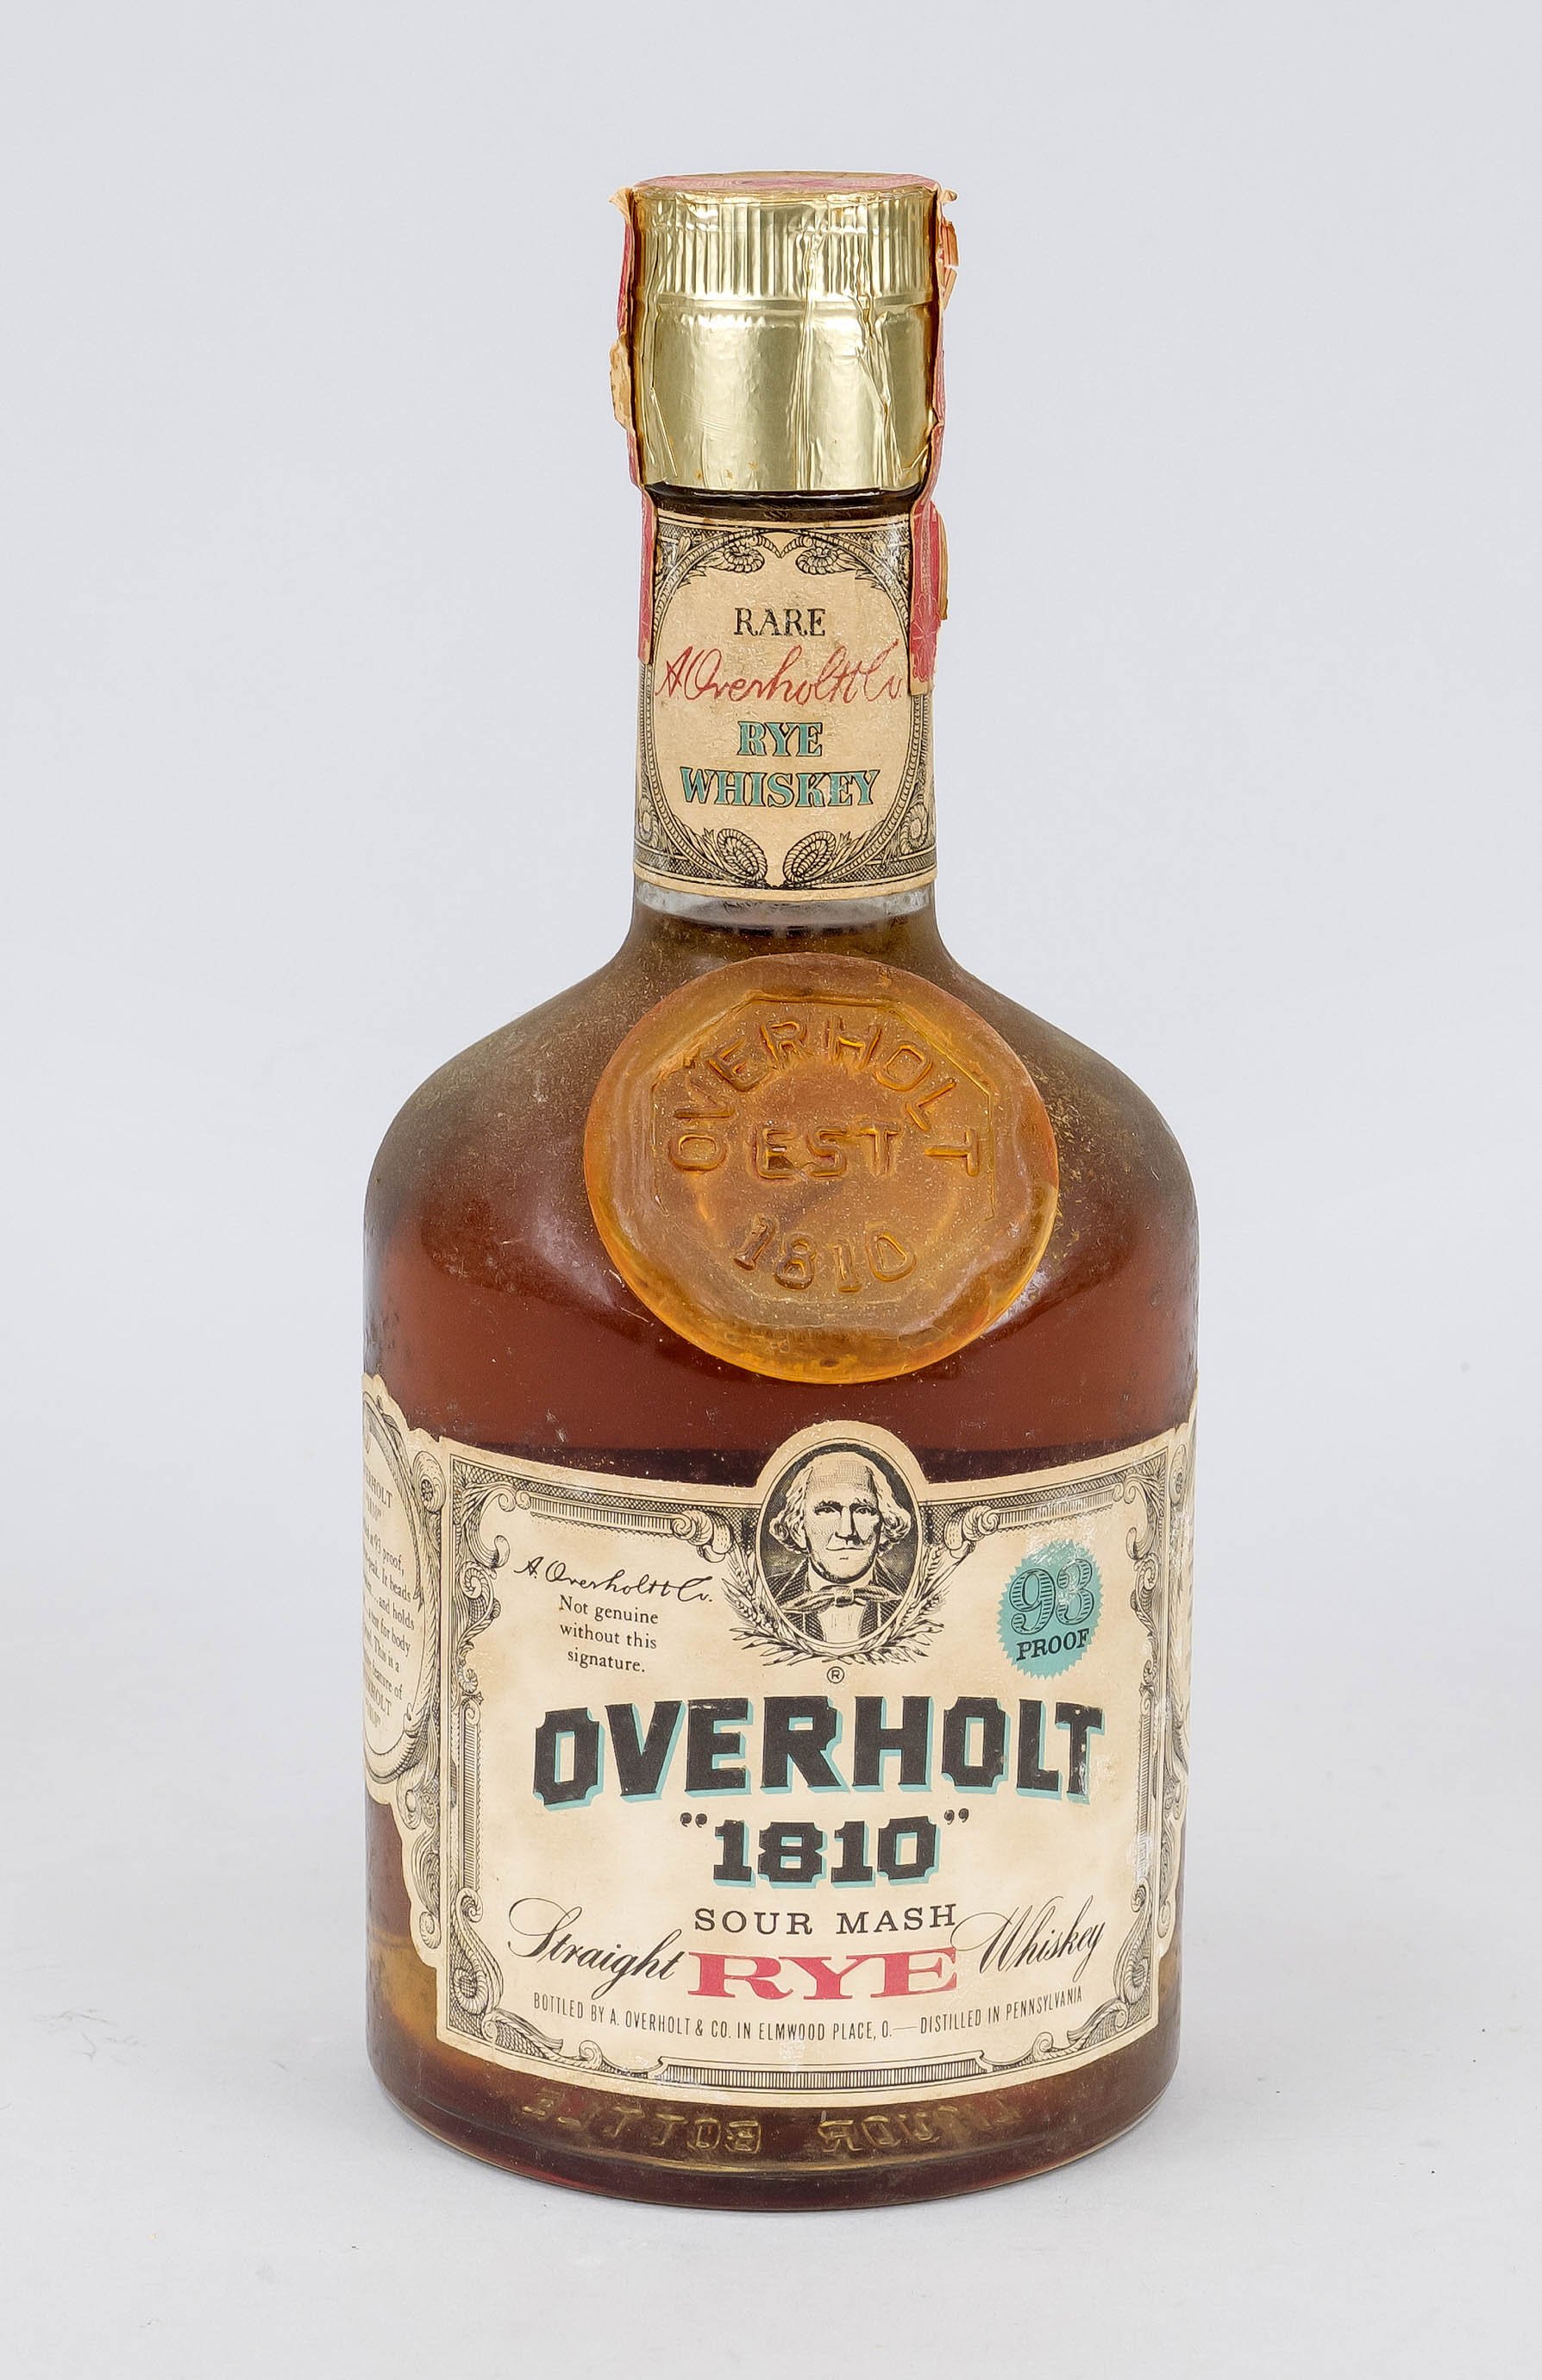 Overholt wiskey bottle, ca. 1960s. ''Overholt 1810 Sour Mash Straight Rye Whiskey'', Distilled in